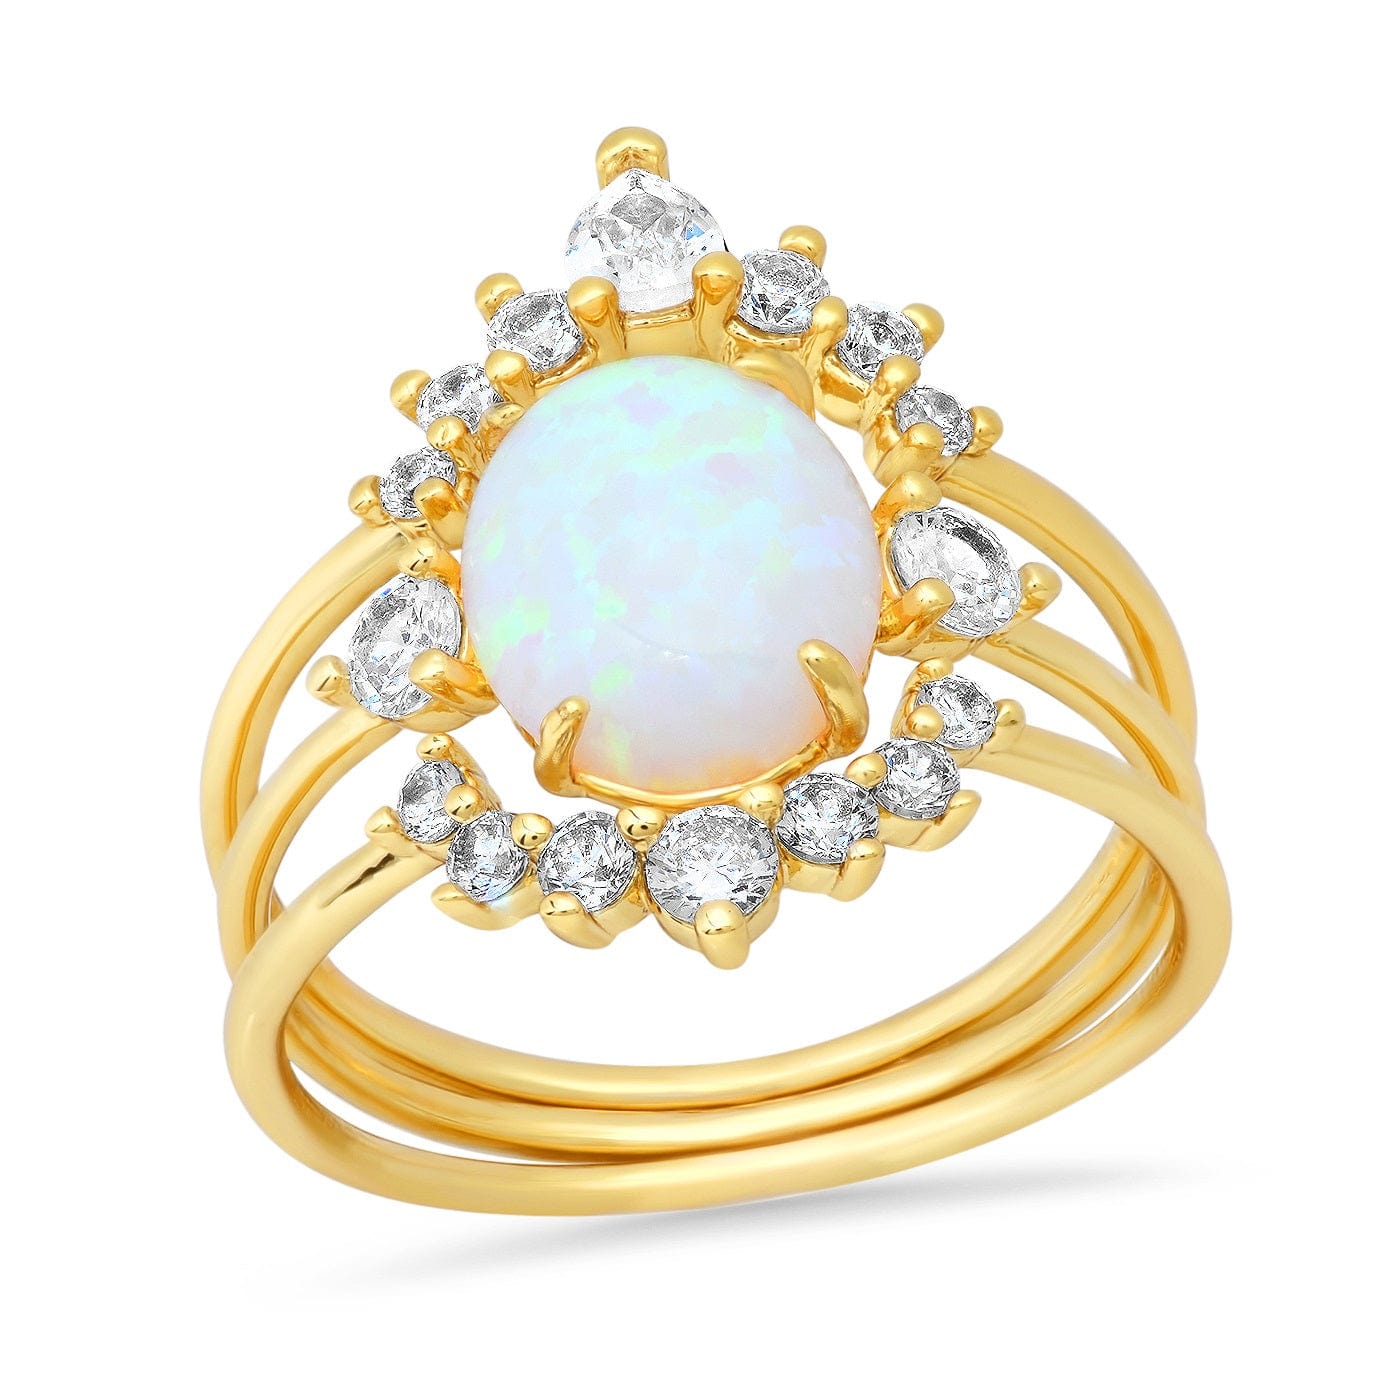 TAI JEWELRY Rings October / 6 Three Piece Vintage Inspired Birthstone Ring